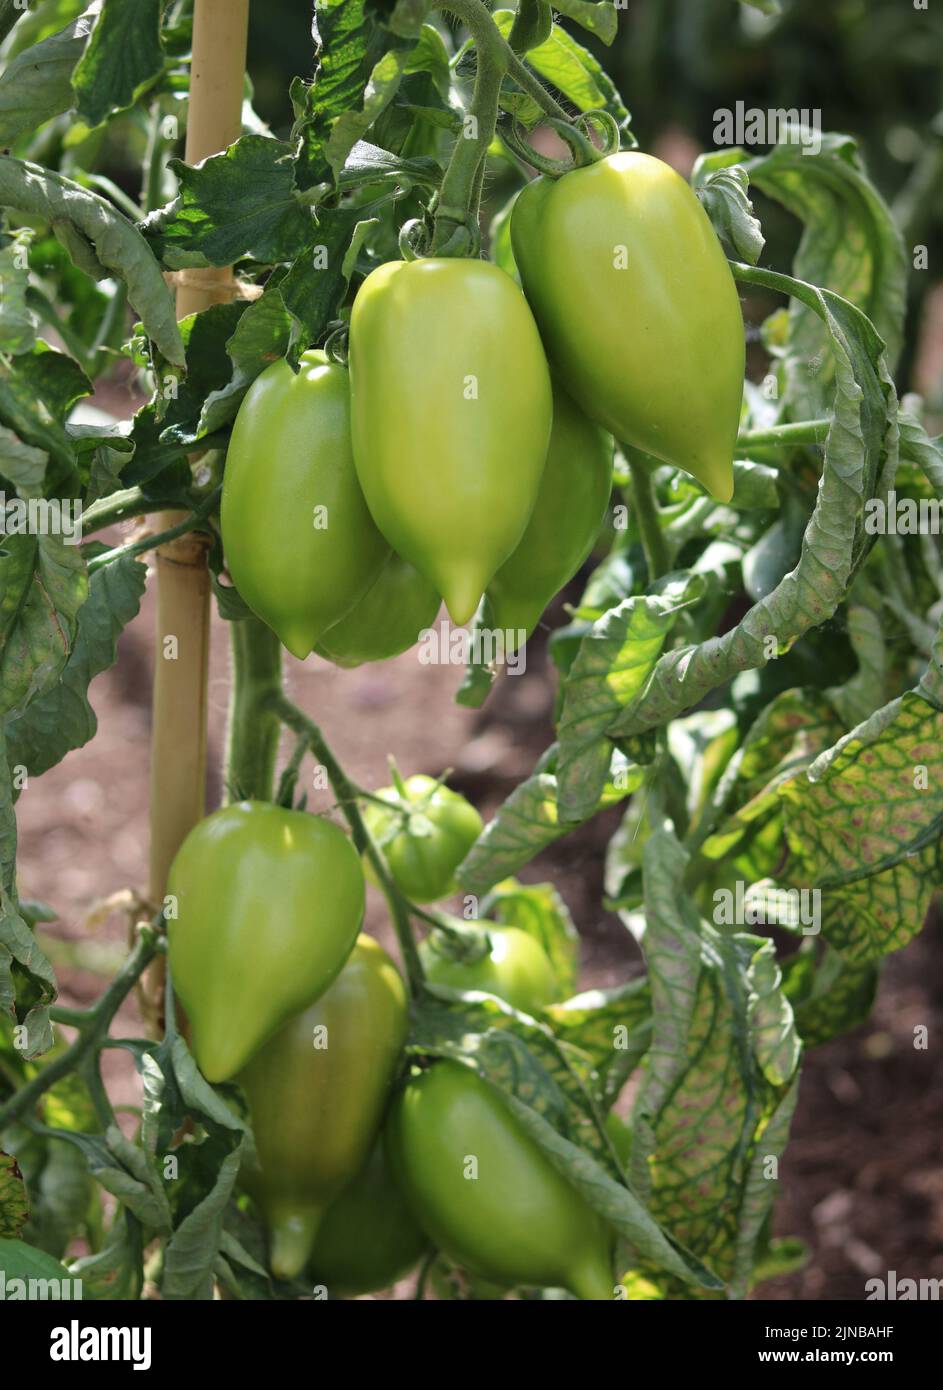 Vertical image of plum tomatoes growing in soil in vegetable garden Stock Photo